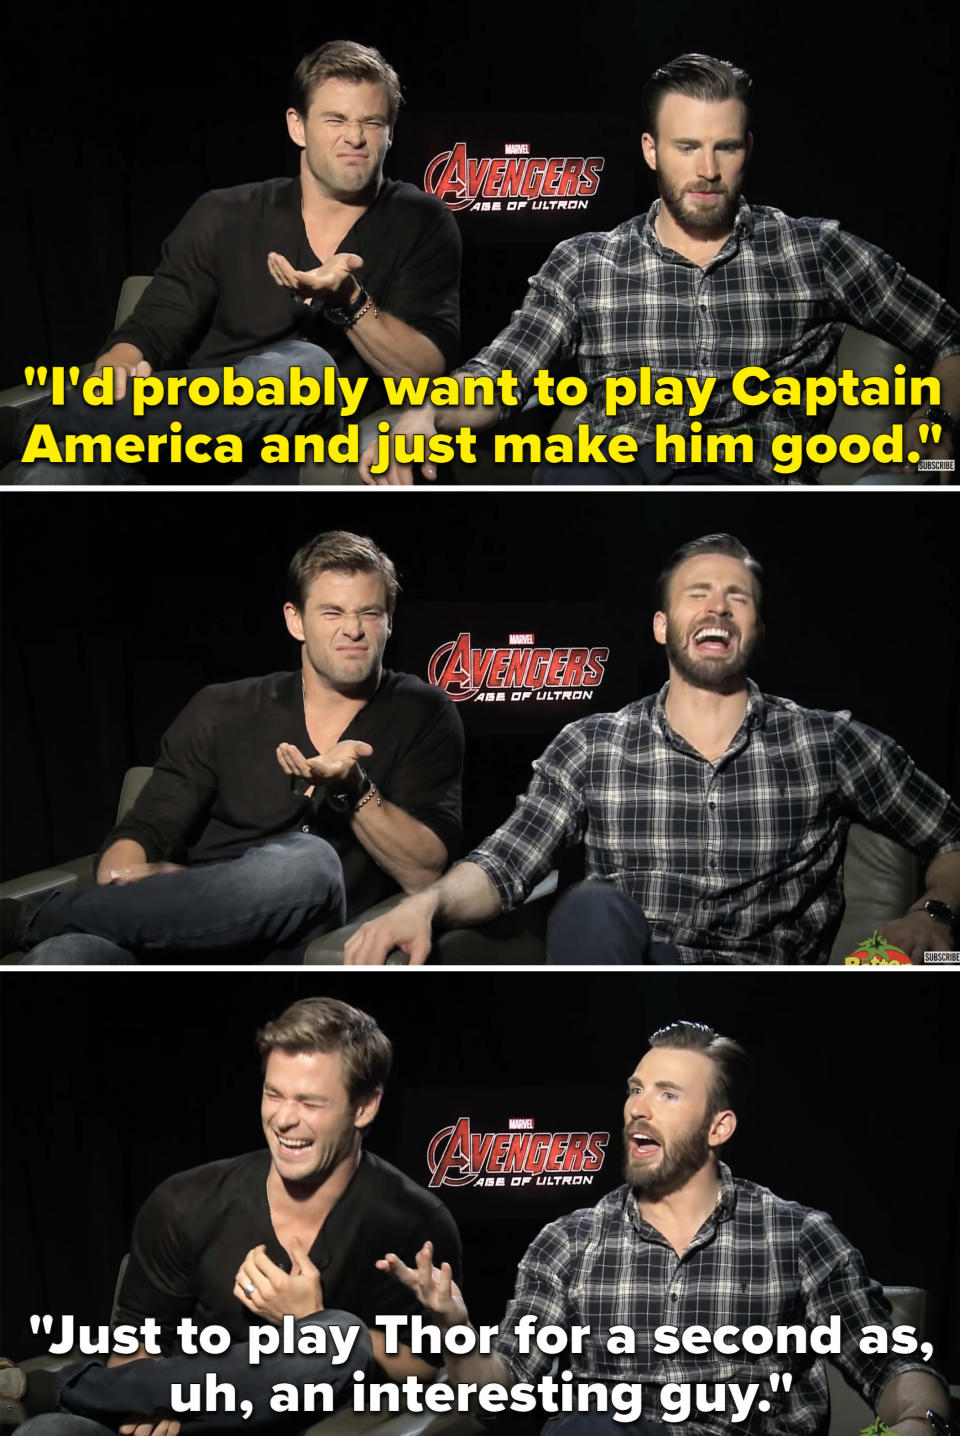 Chris Hemsworth saying he'd like to play Captain America and "make him good" and Chris Evans saying he'd play Thor and making him interesting